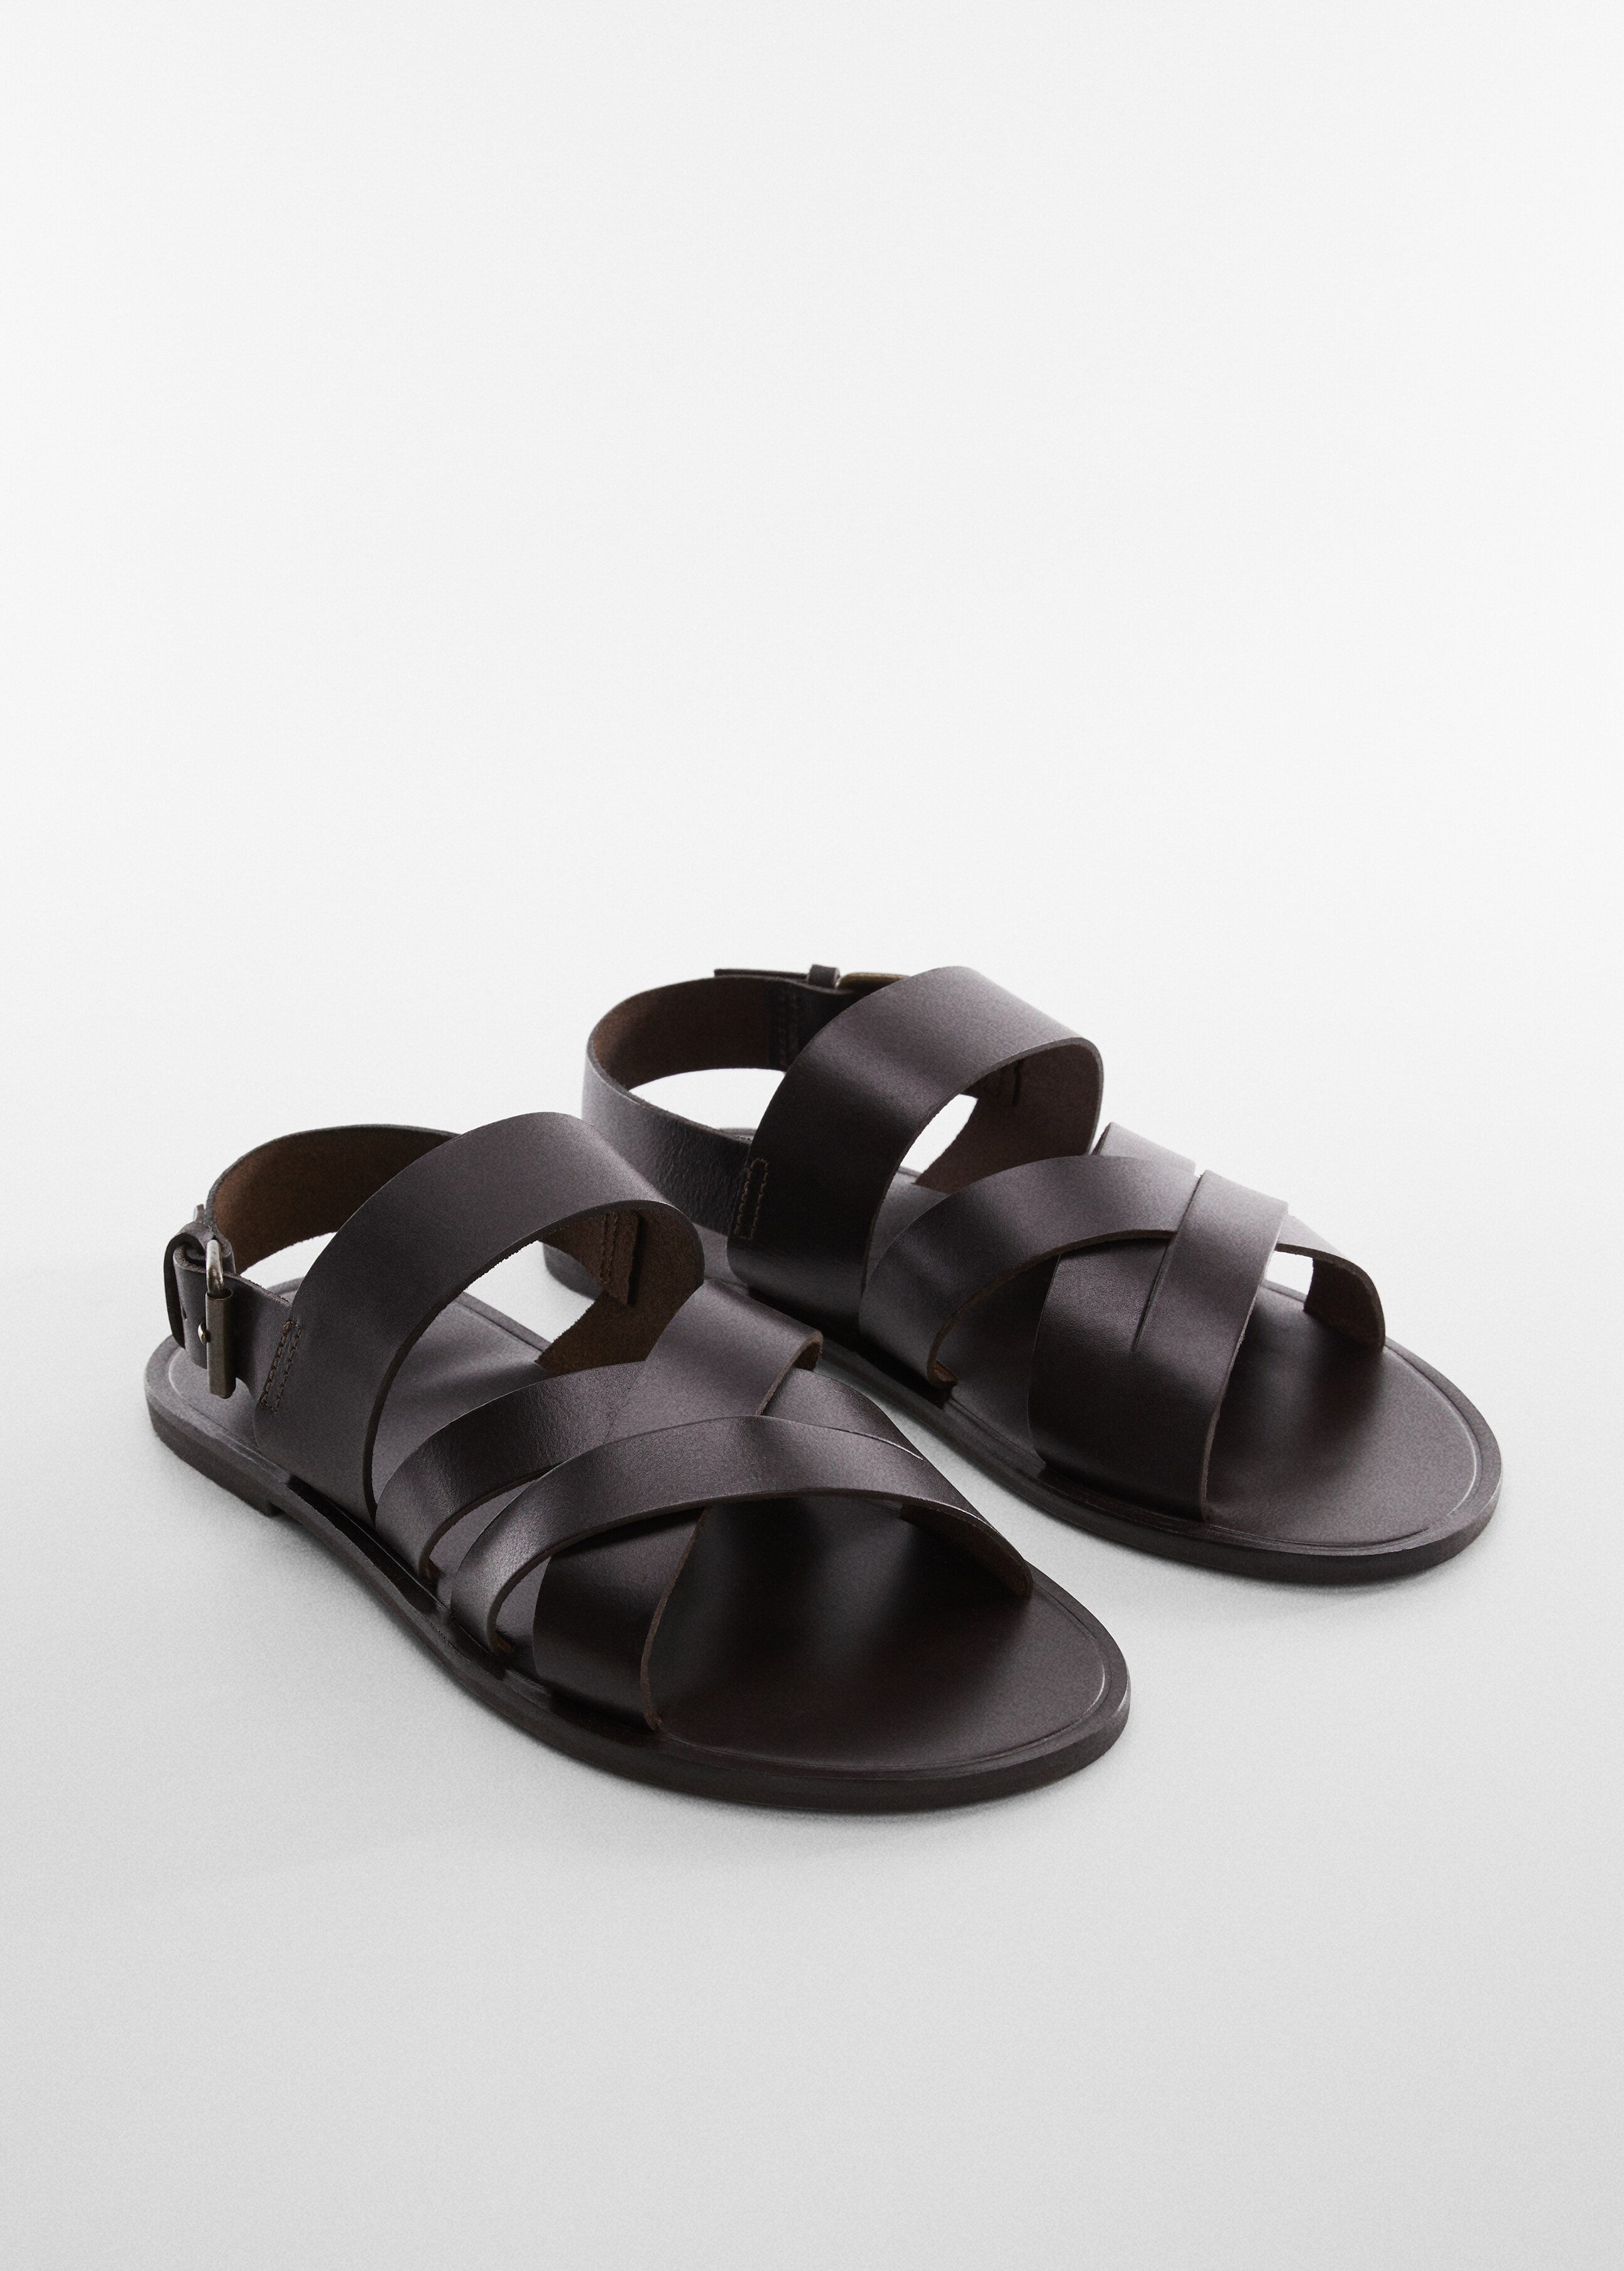 Leather sandals with straps - Medium plane